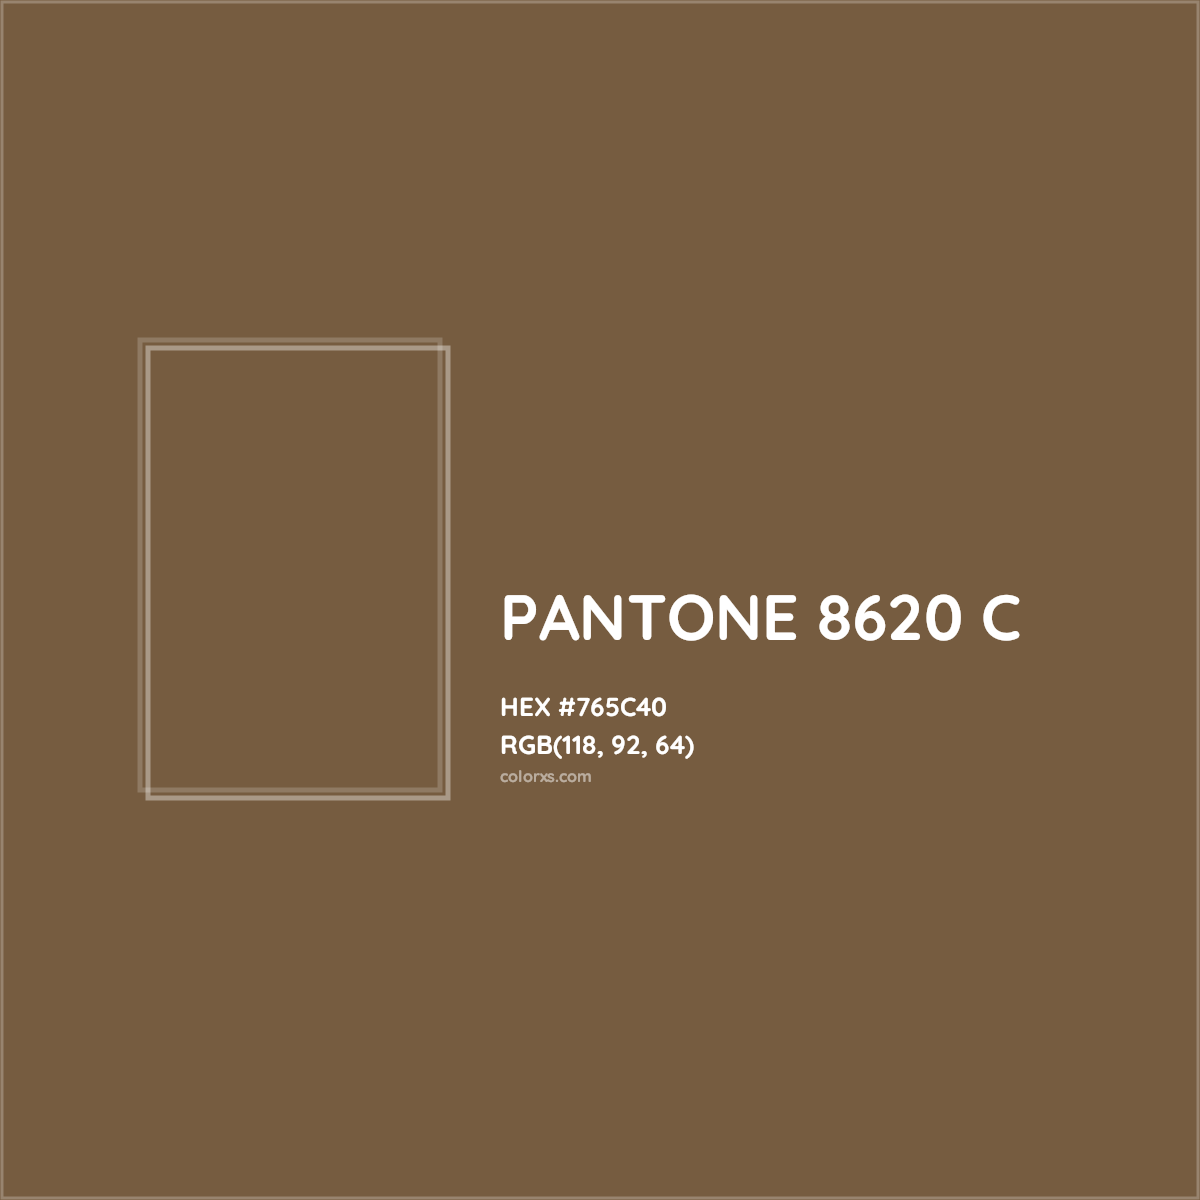 HEX #765C40 PANTONE 8620 C CMS Pantone PMS - Color Code